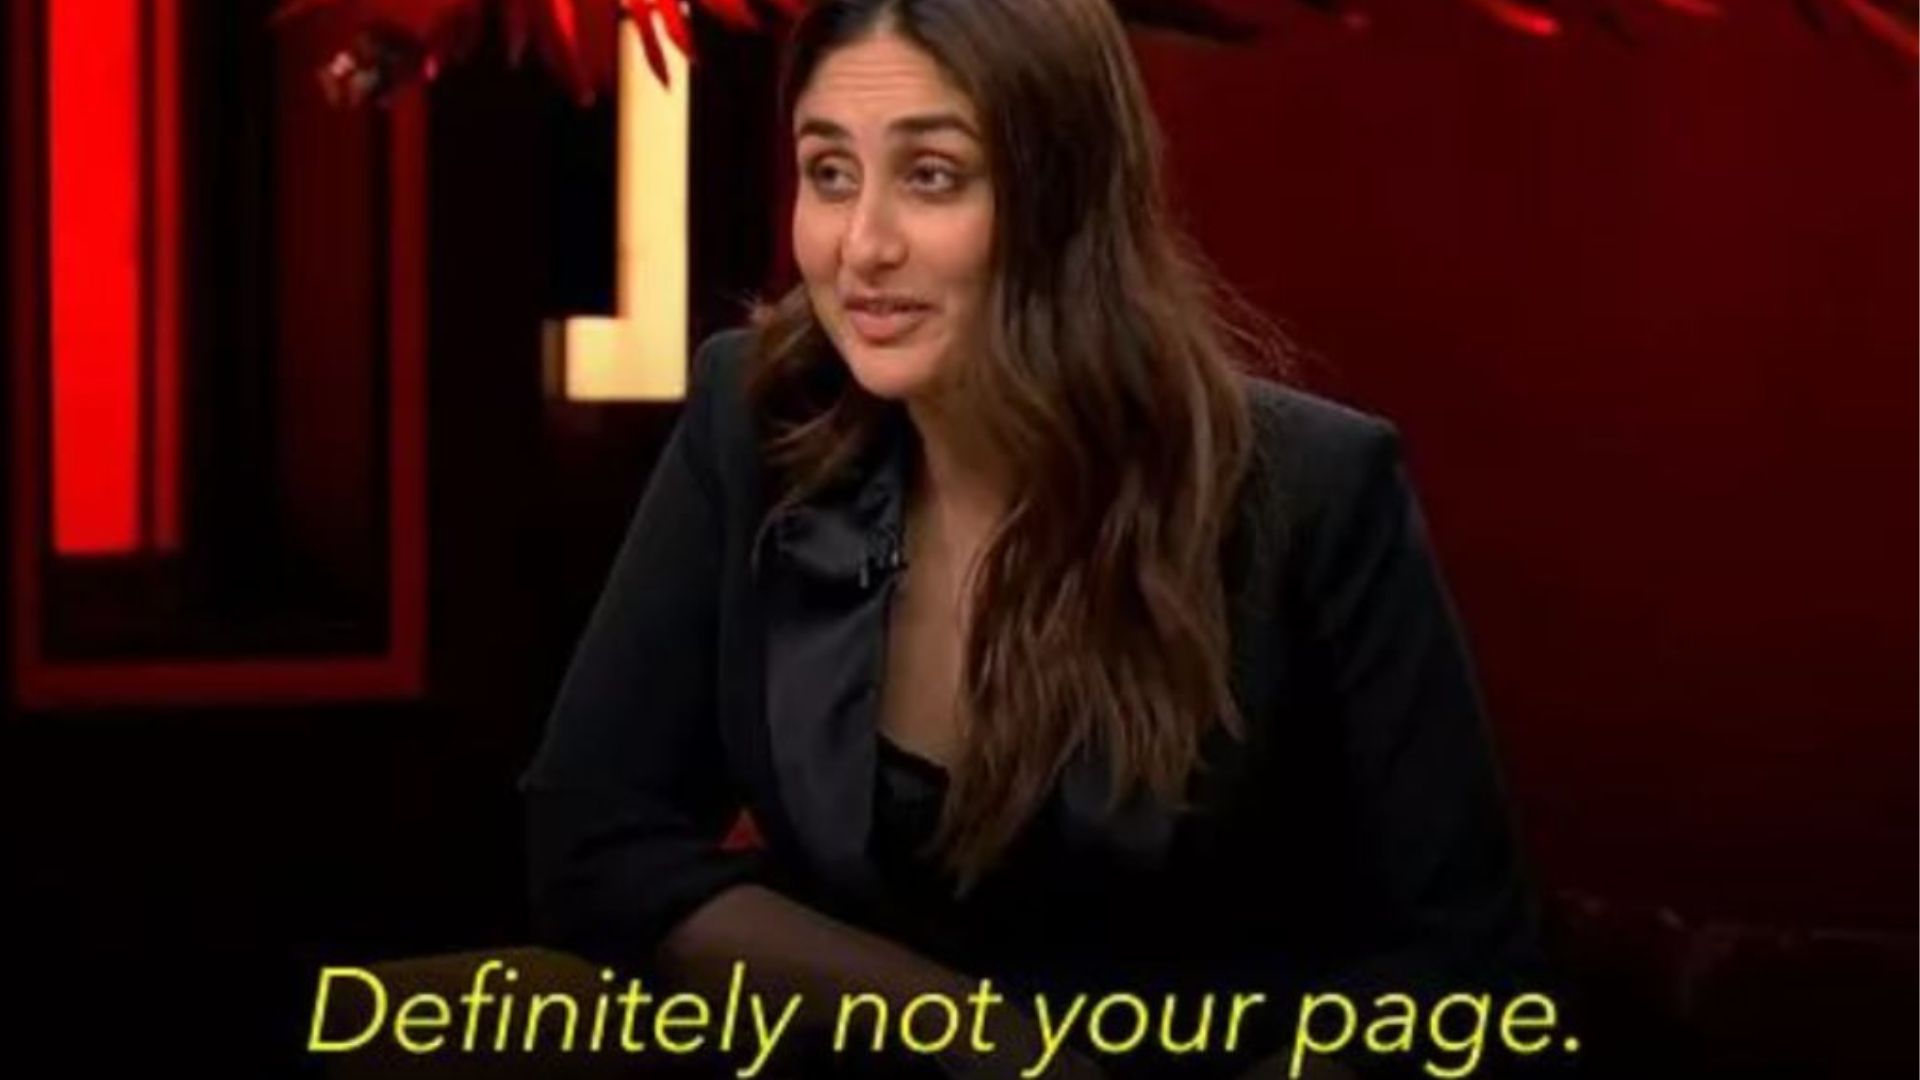 Image of Kareena Kapoor saying "definitely not your page"-nonprofit humour